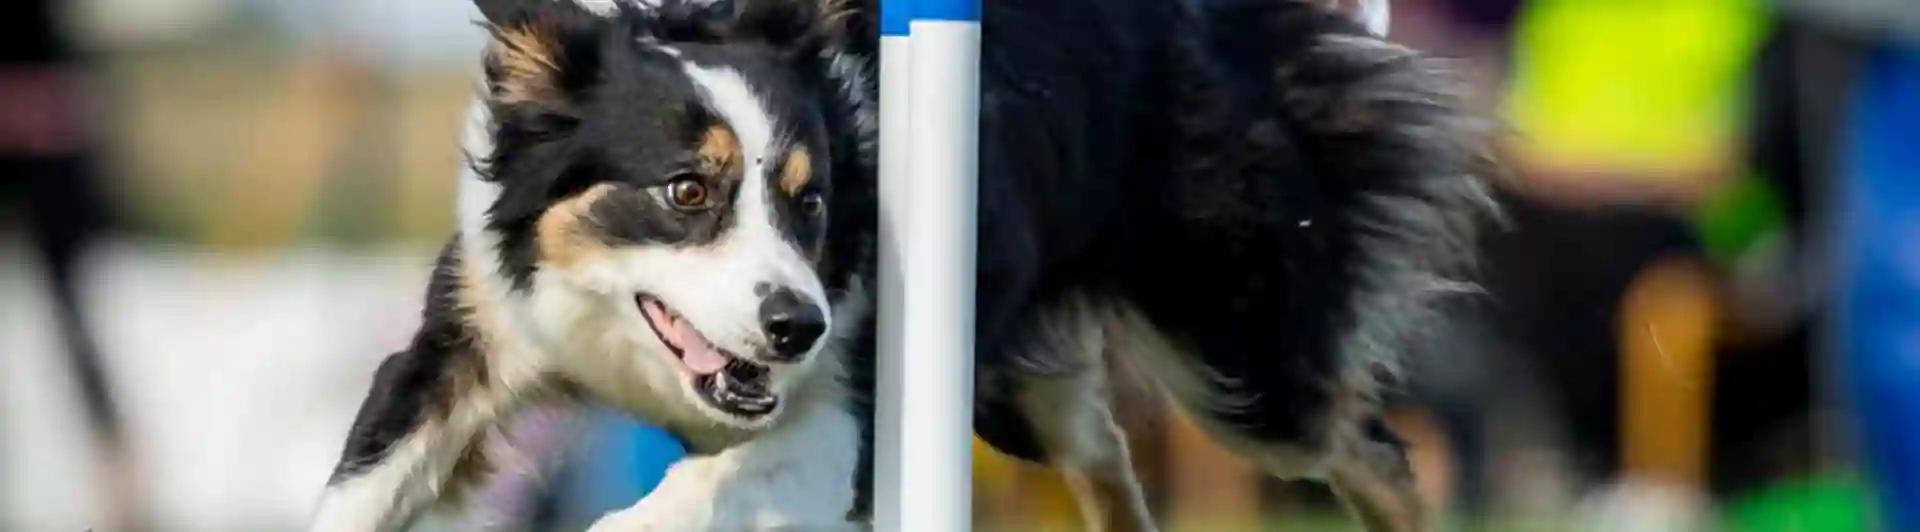 Hund på agilitytävling i slalommomentet